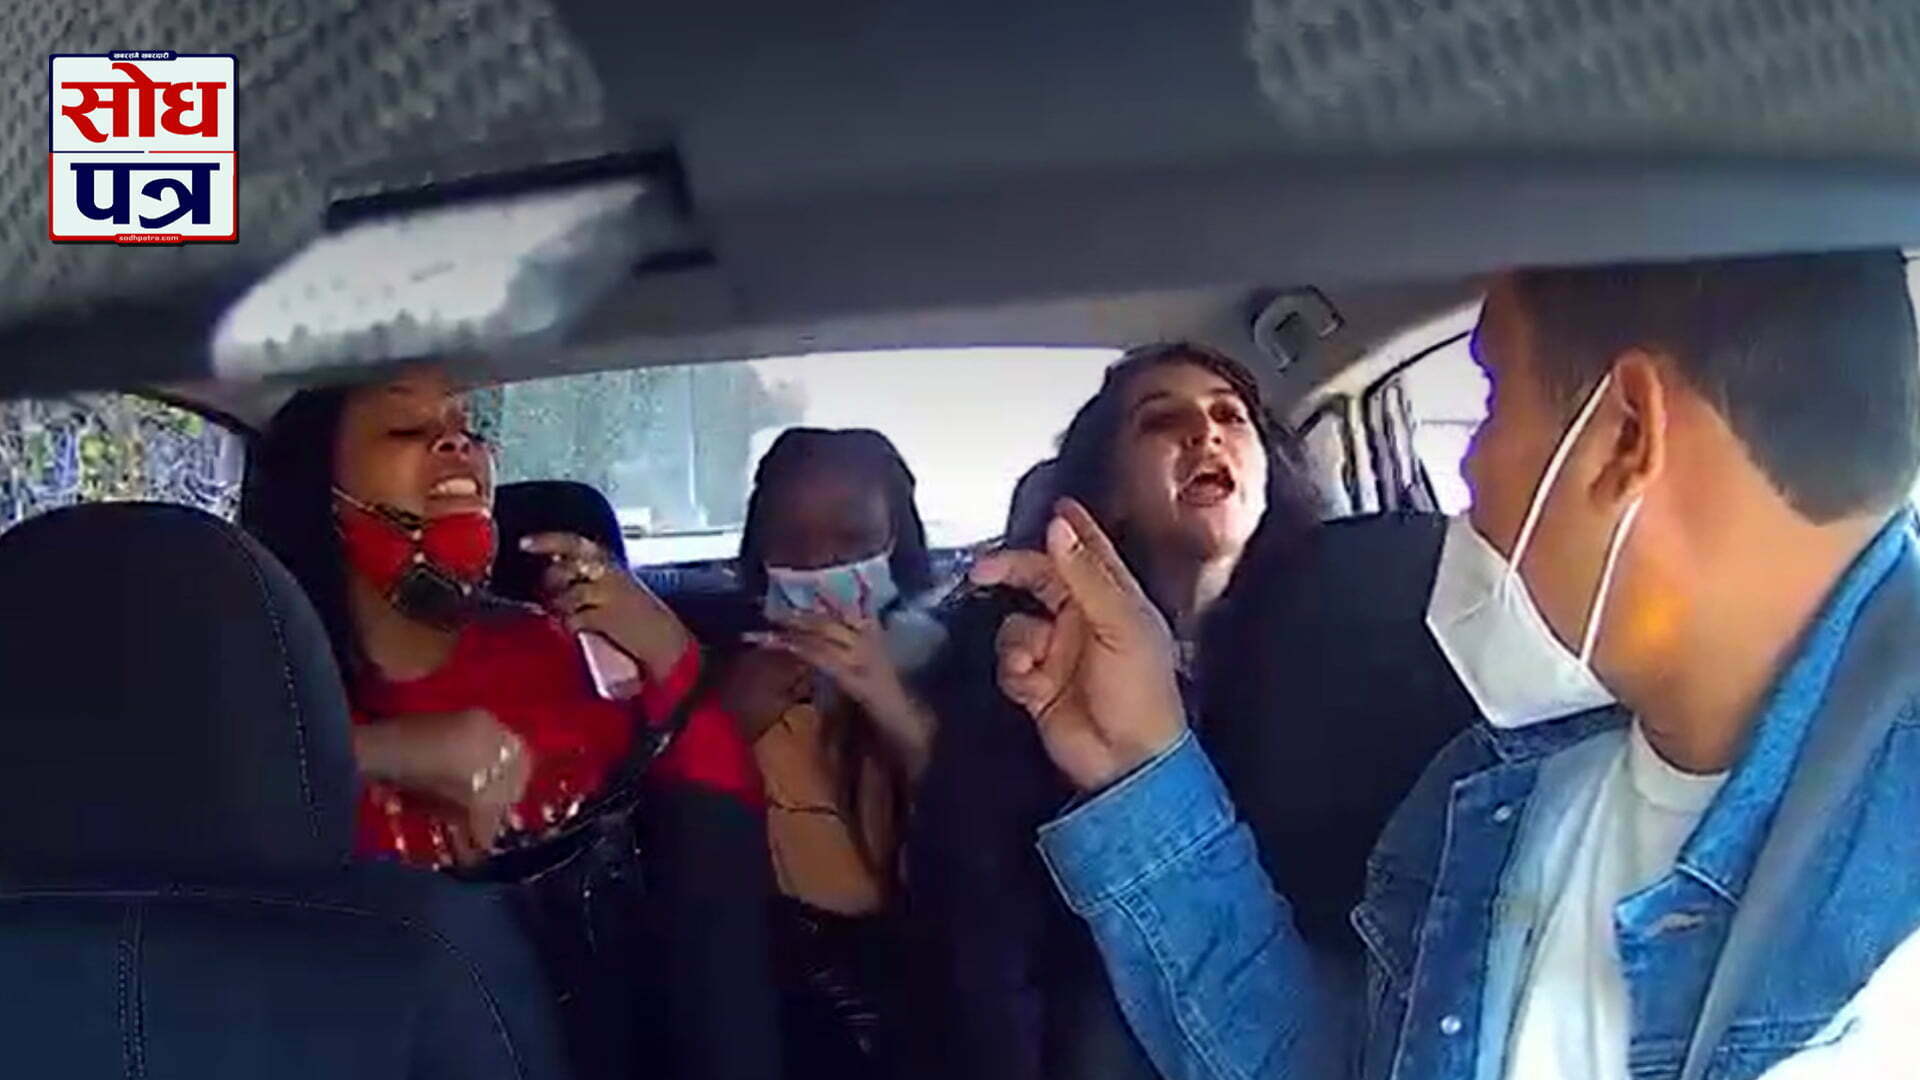 Maskless woman attacks Uber driver